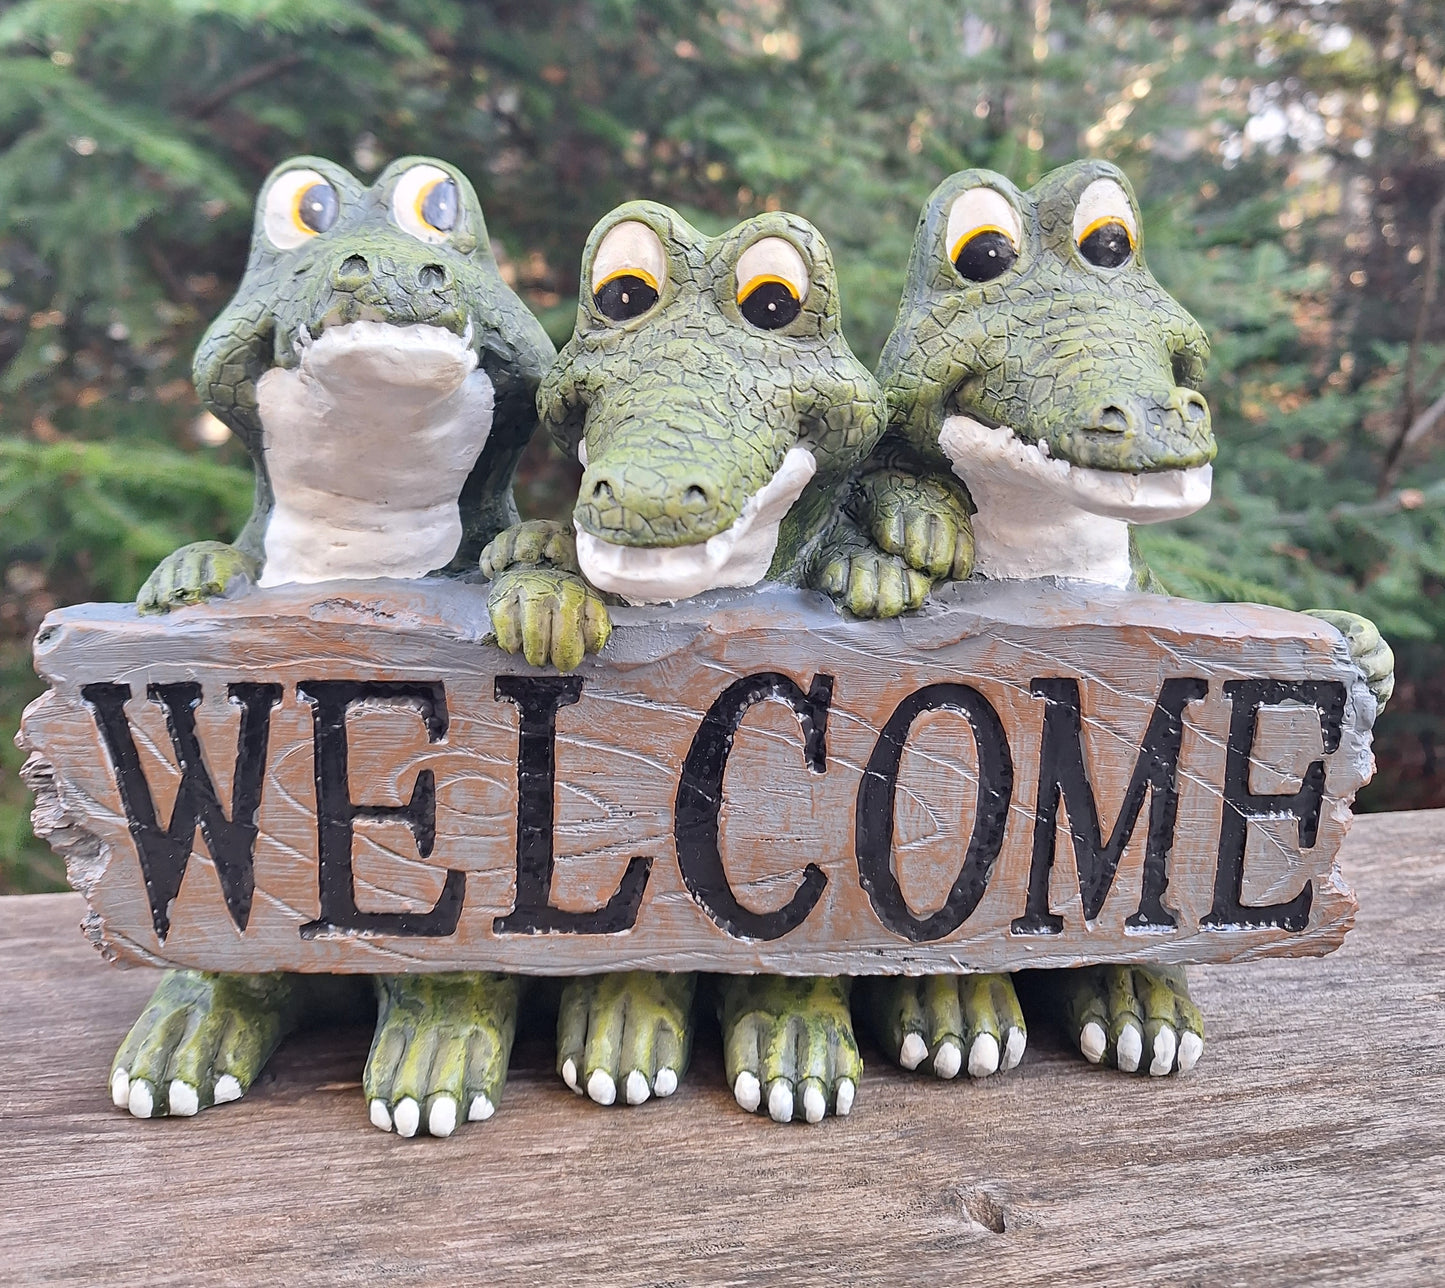 welcoming crocodile threesome statue for sale